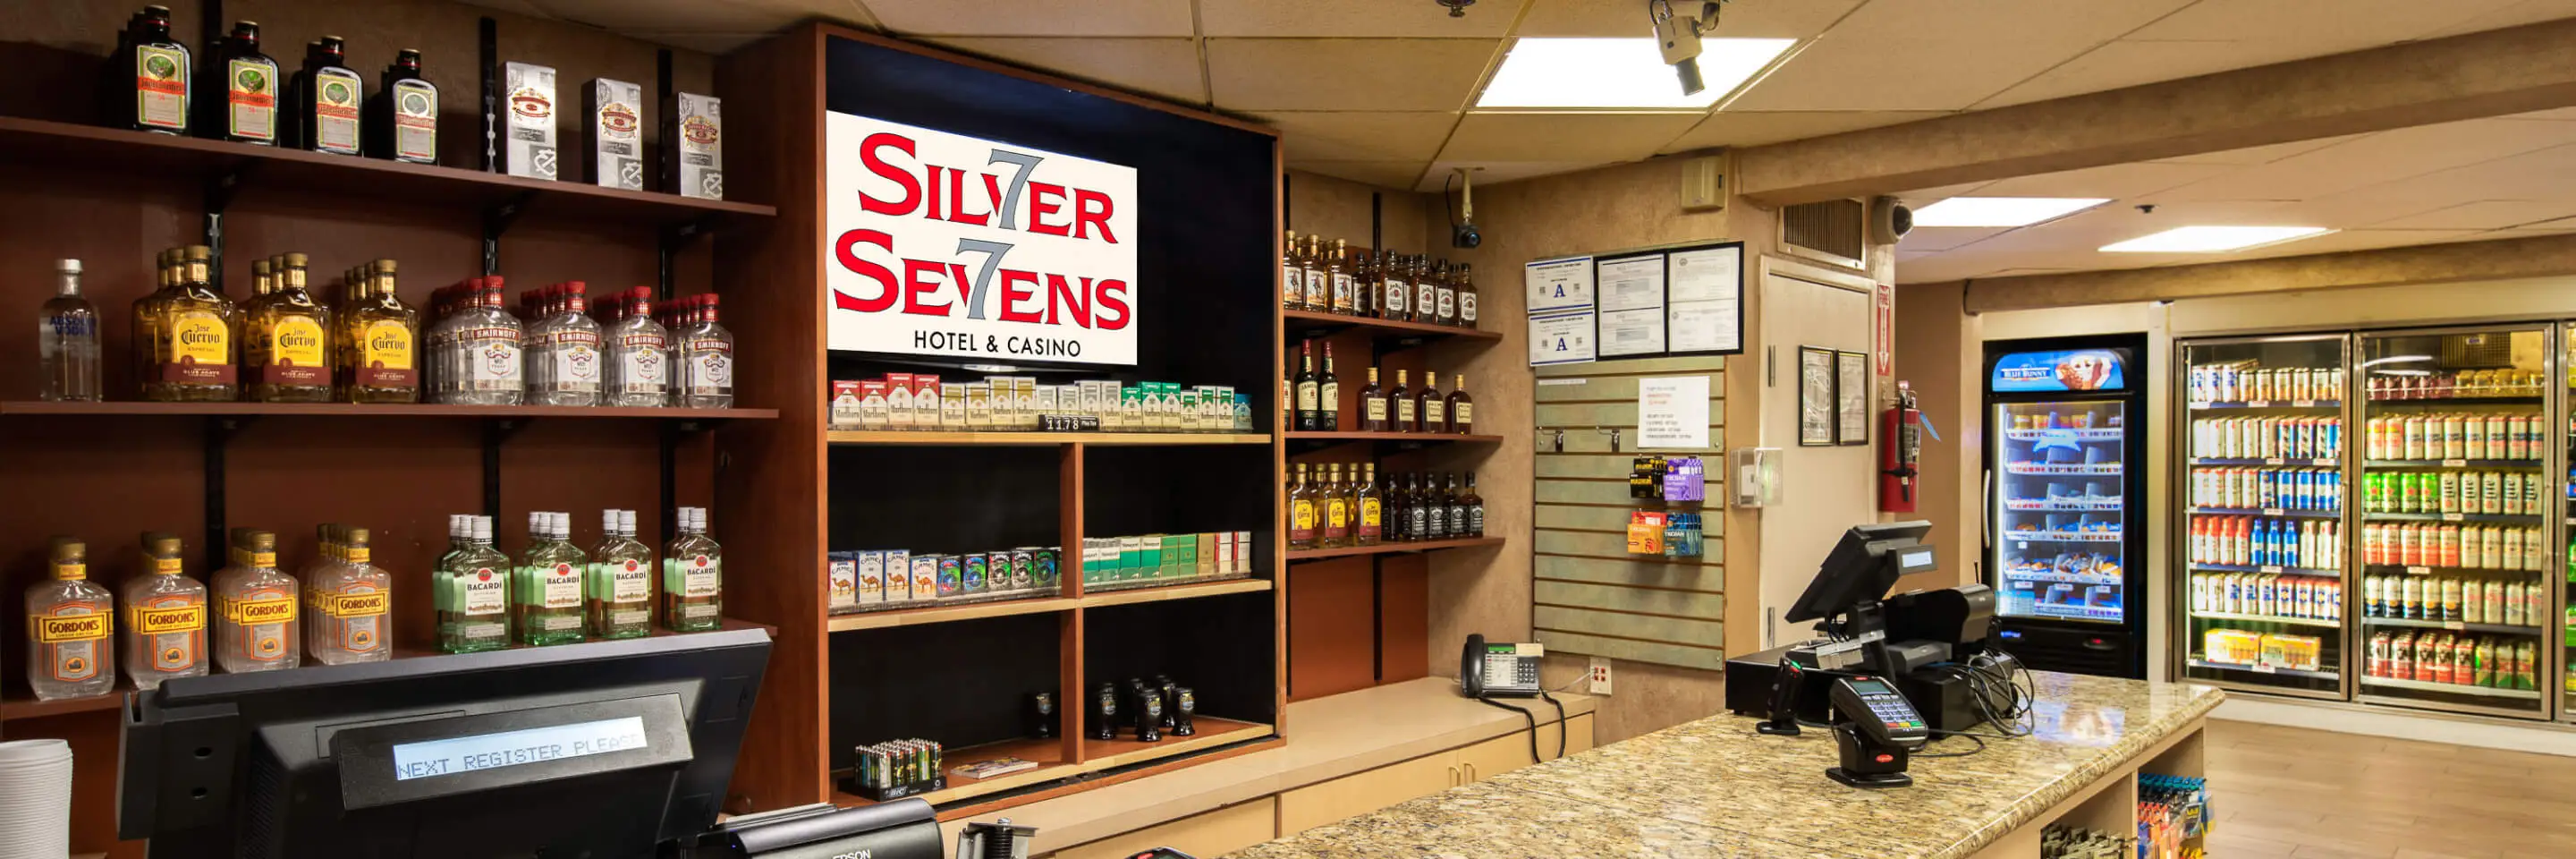 Silver Sevens Casino - Market Store Banner